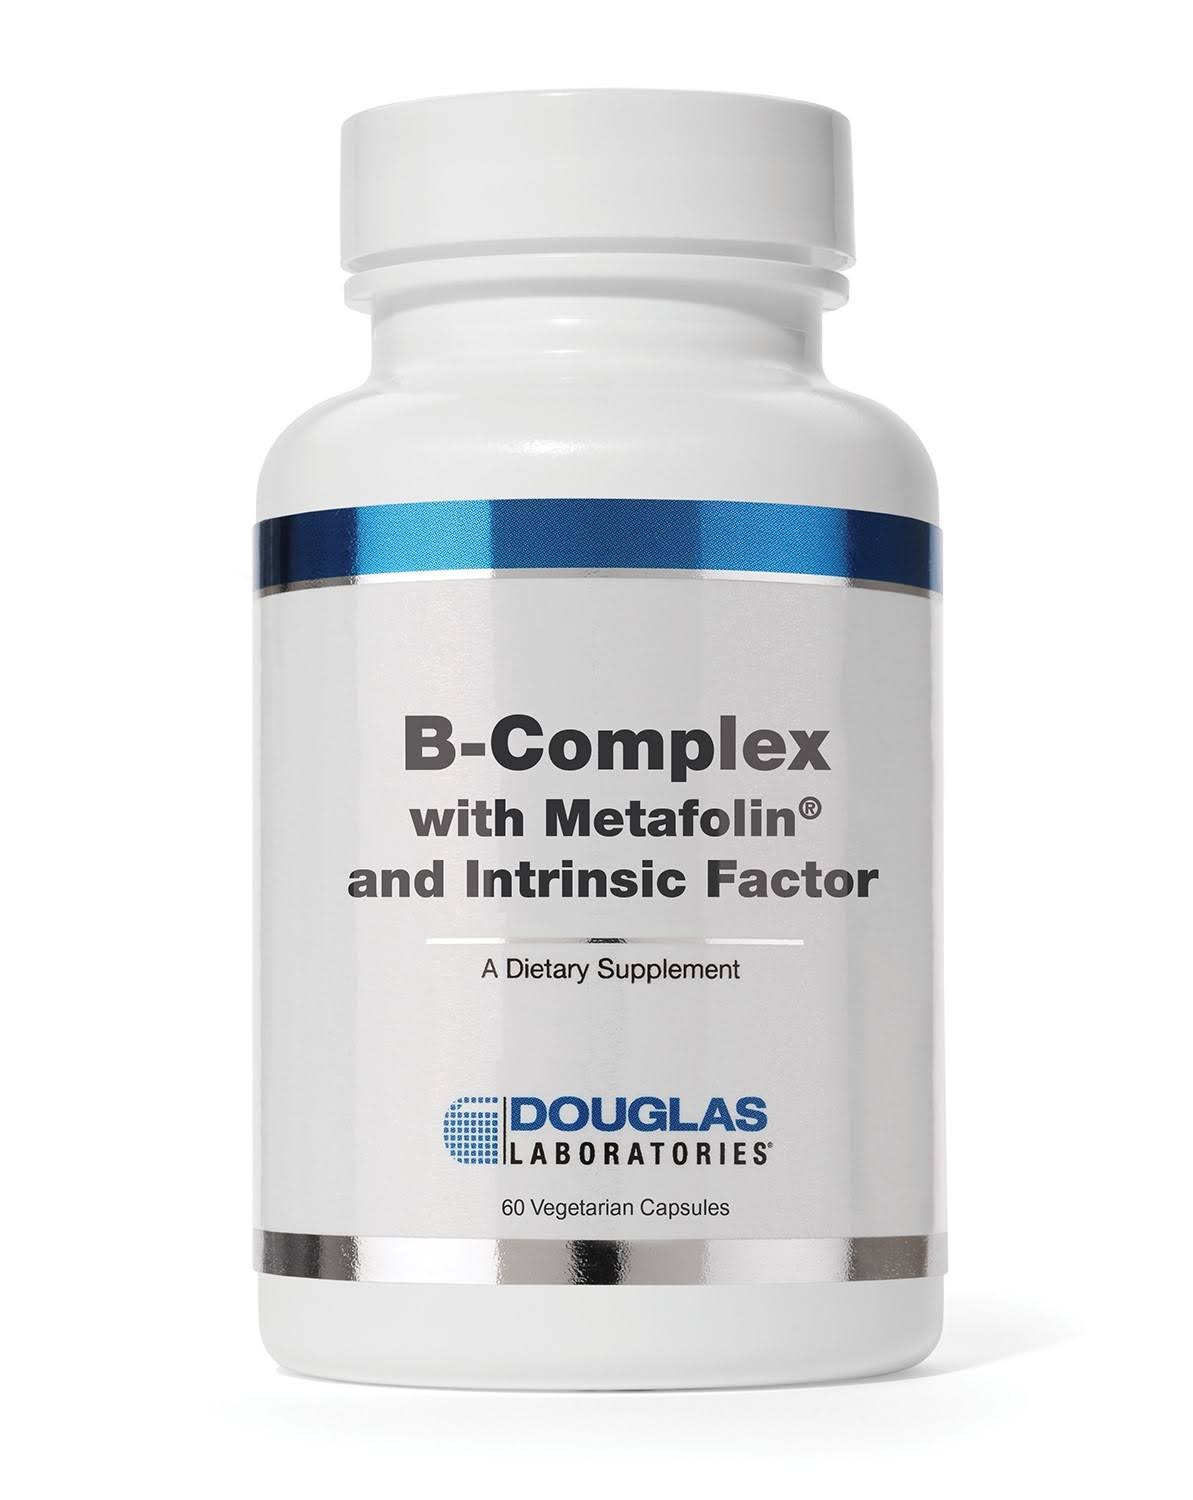 Douglas Labs B Complex Supplement - with Metafolin, 60 Capsules